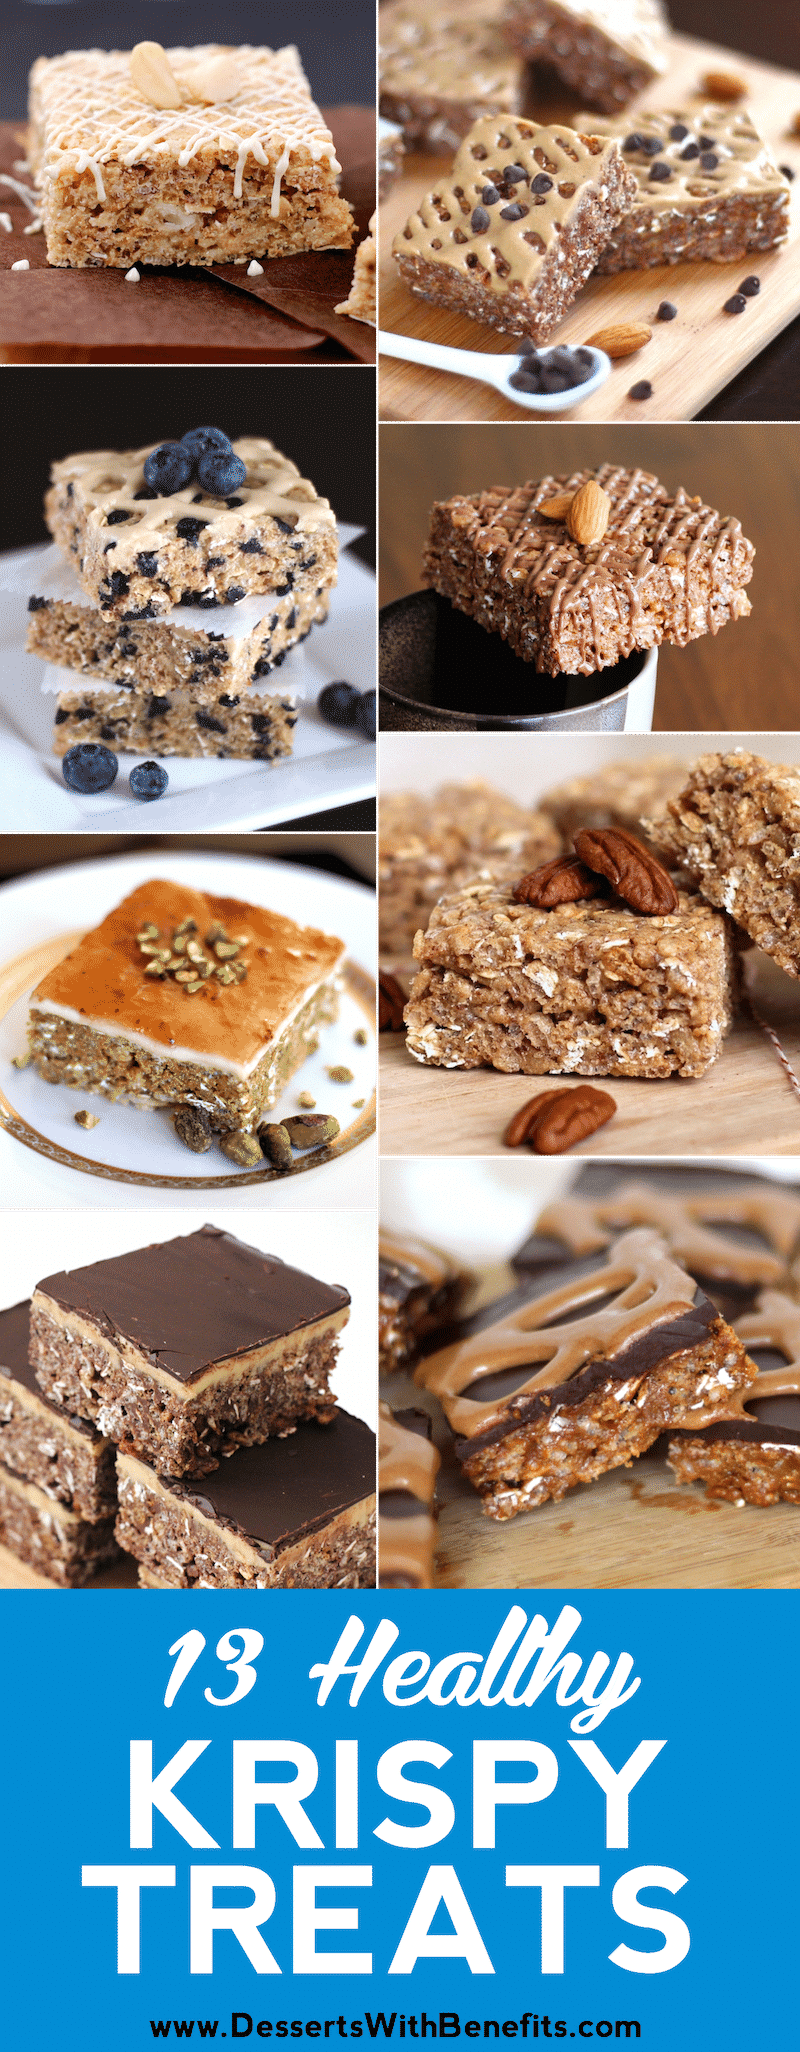 13 Healthy Krispy Treats Recipes (no bake, gluten free, refined sugar free, high protein) - Desserts with Benefits